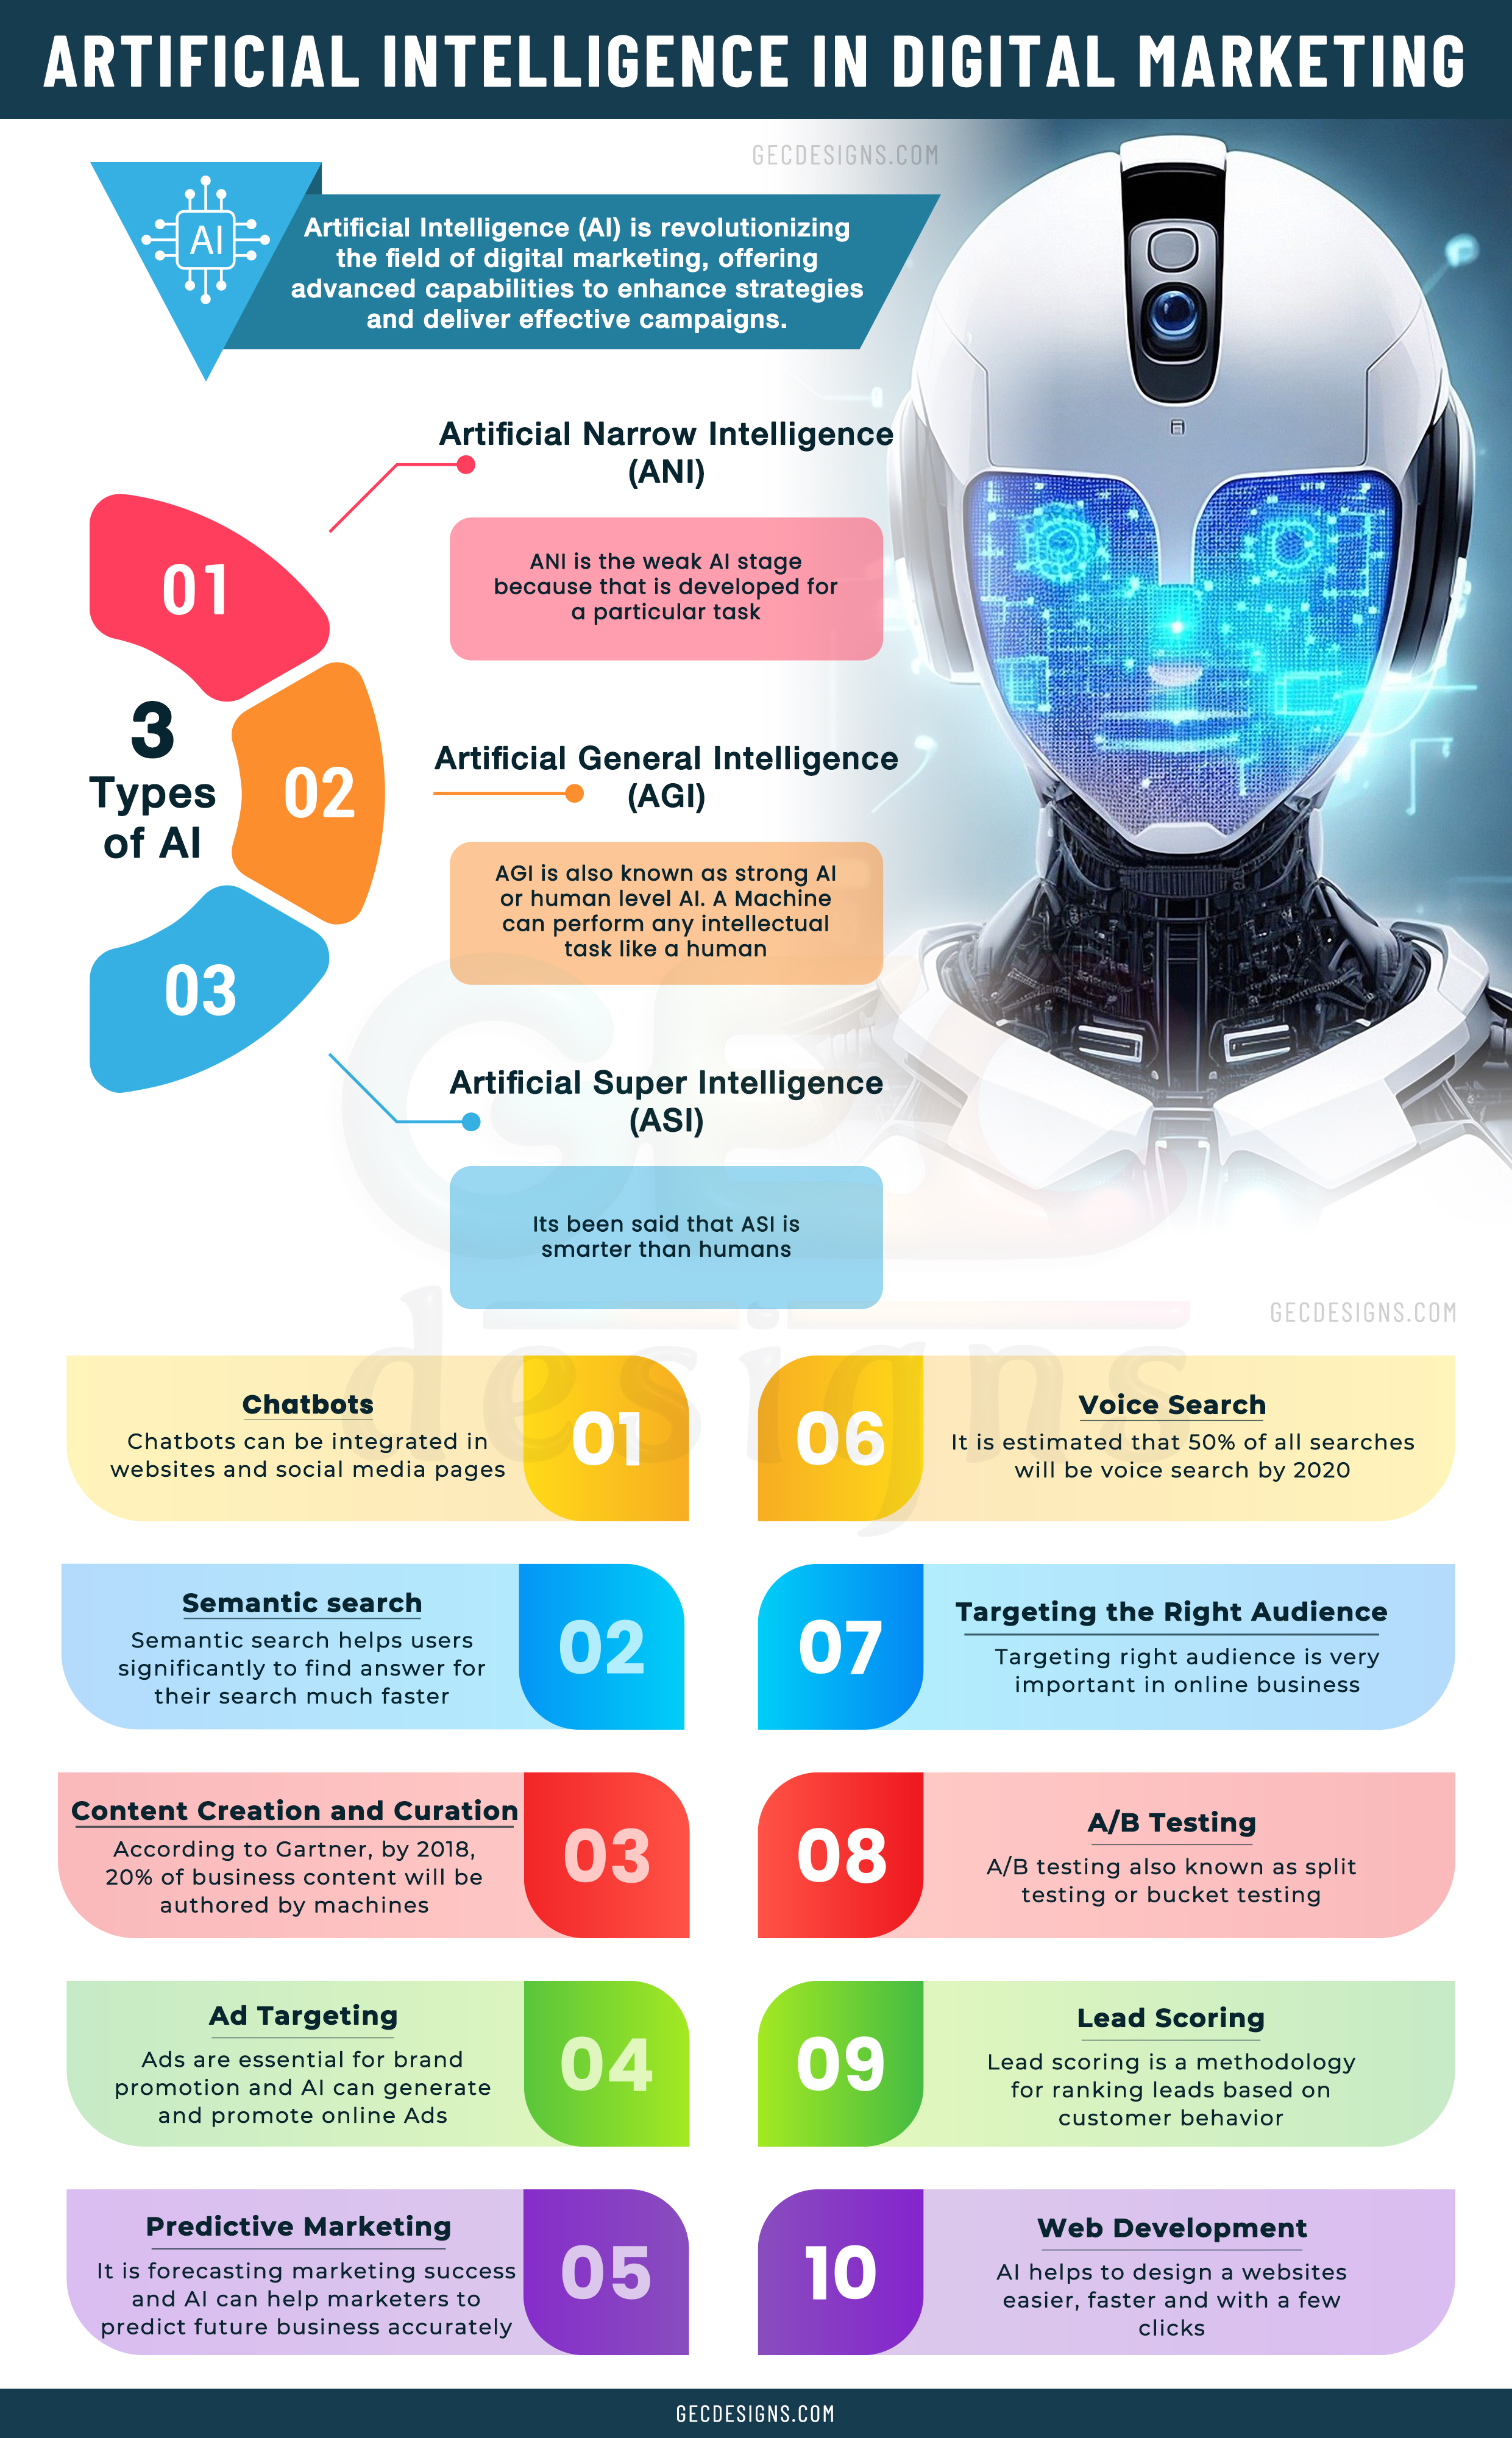 Artificial Intelligence on digital marketing image